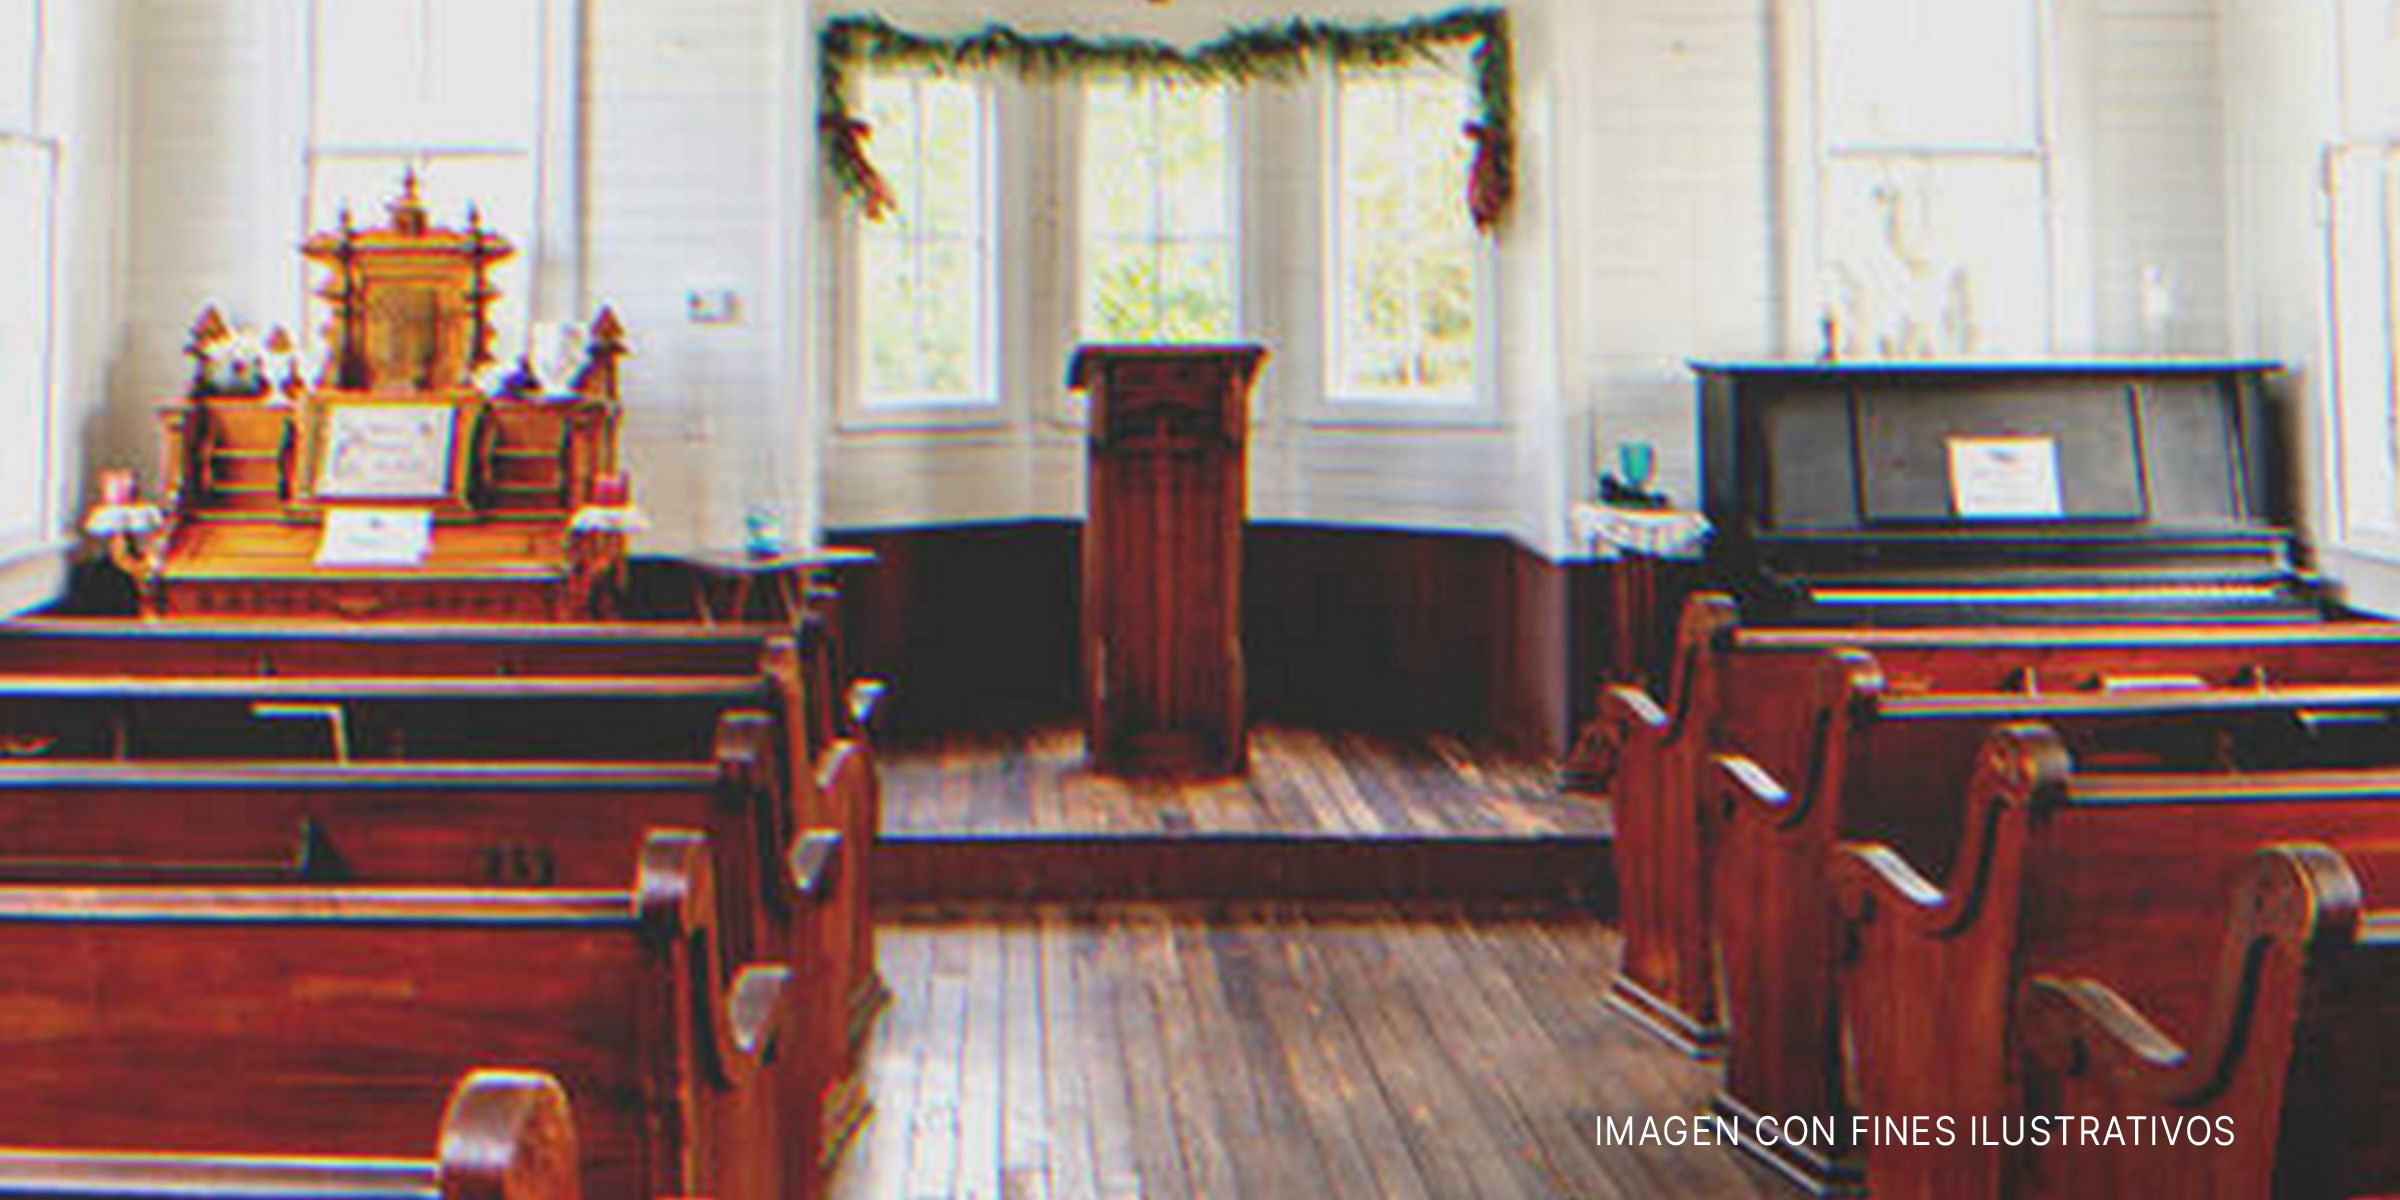 Capilla de una iglesia | Foto: Shutterstock